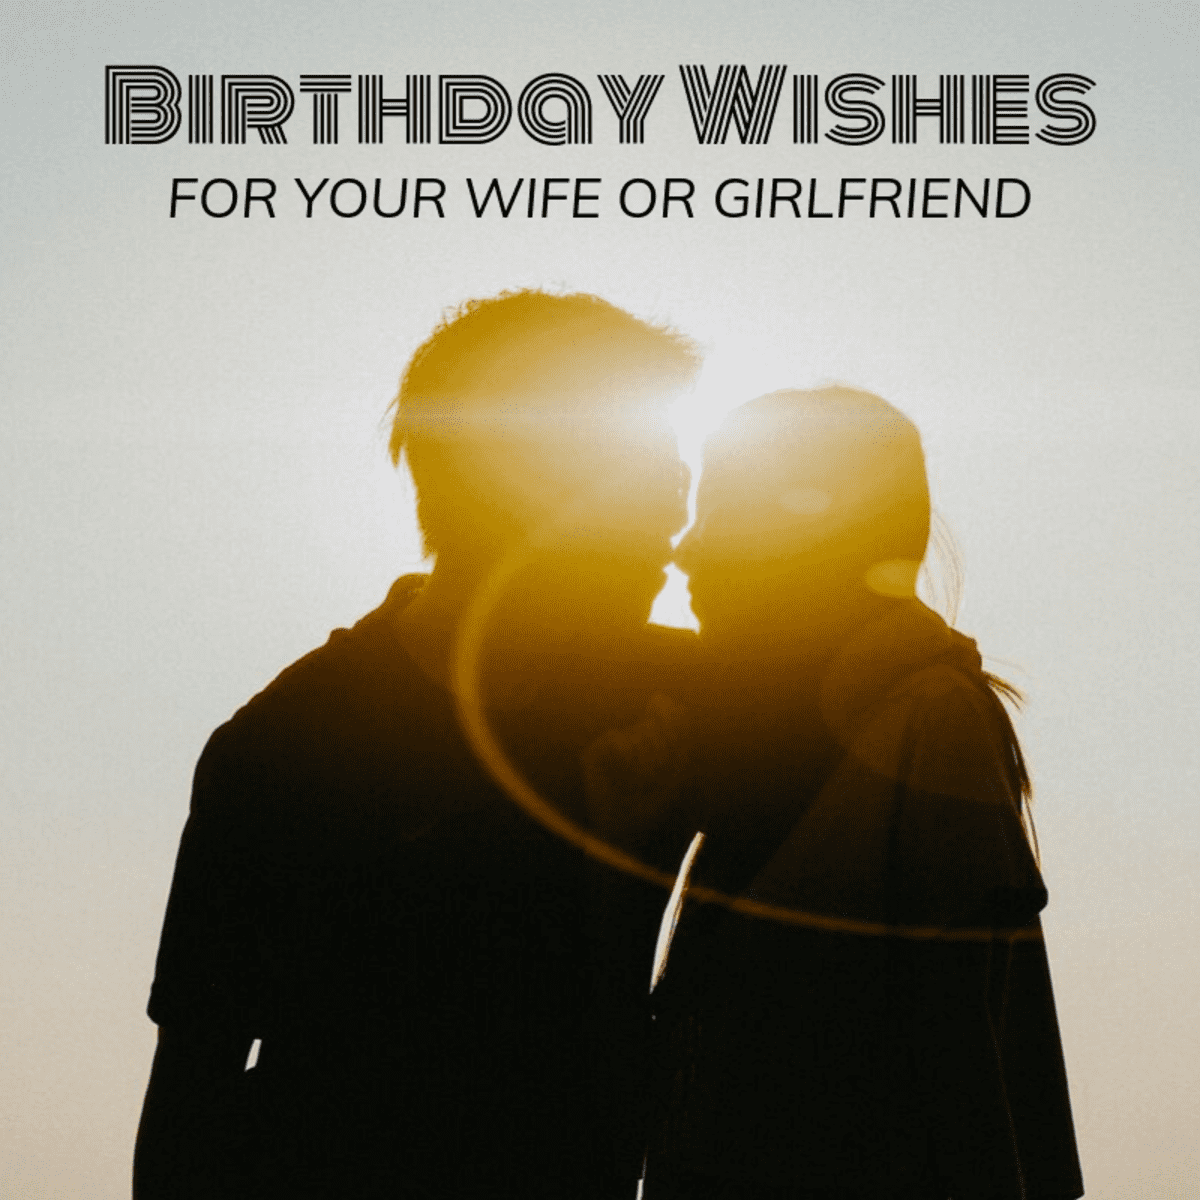 happy birthday for girlfriend poems